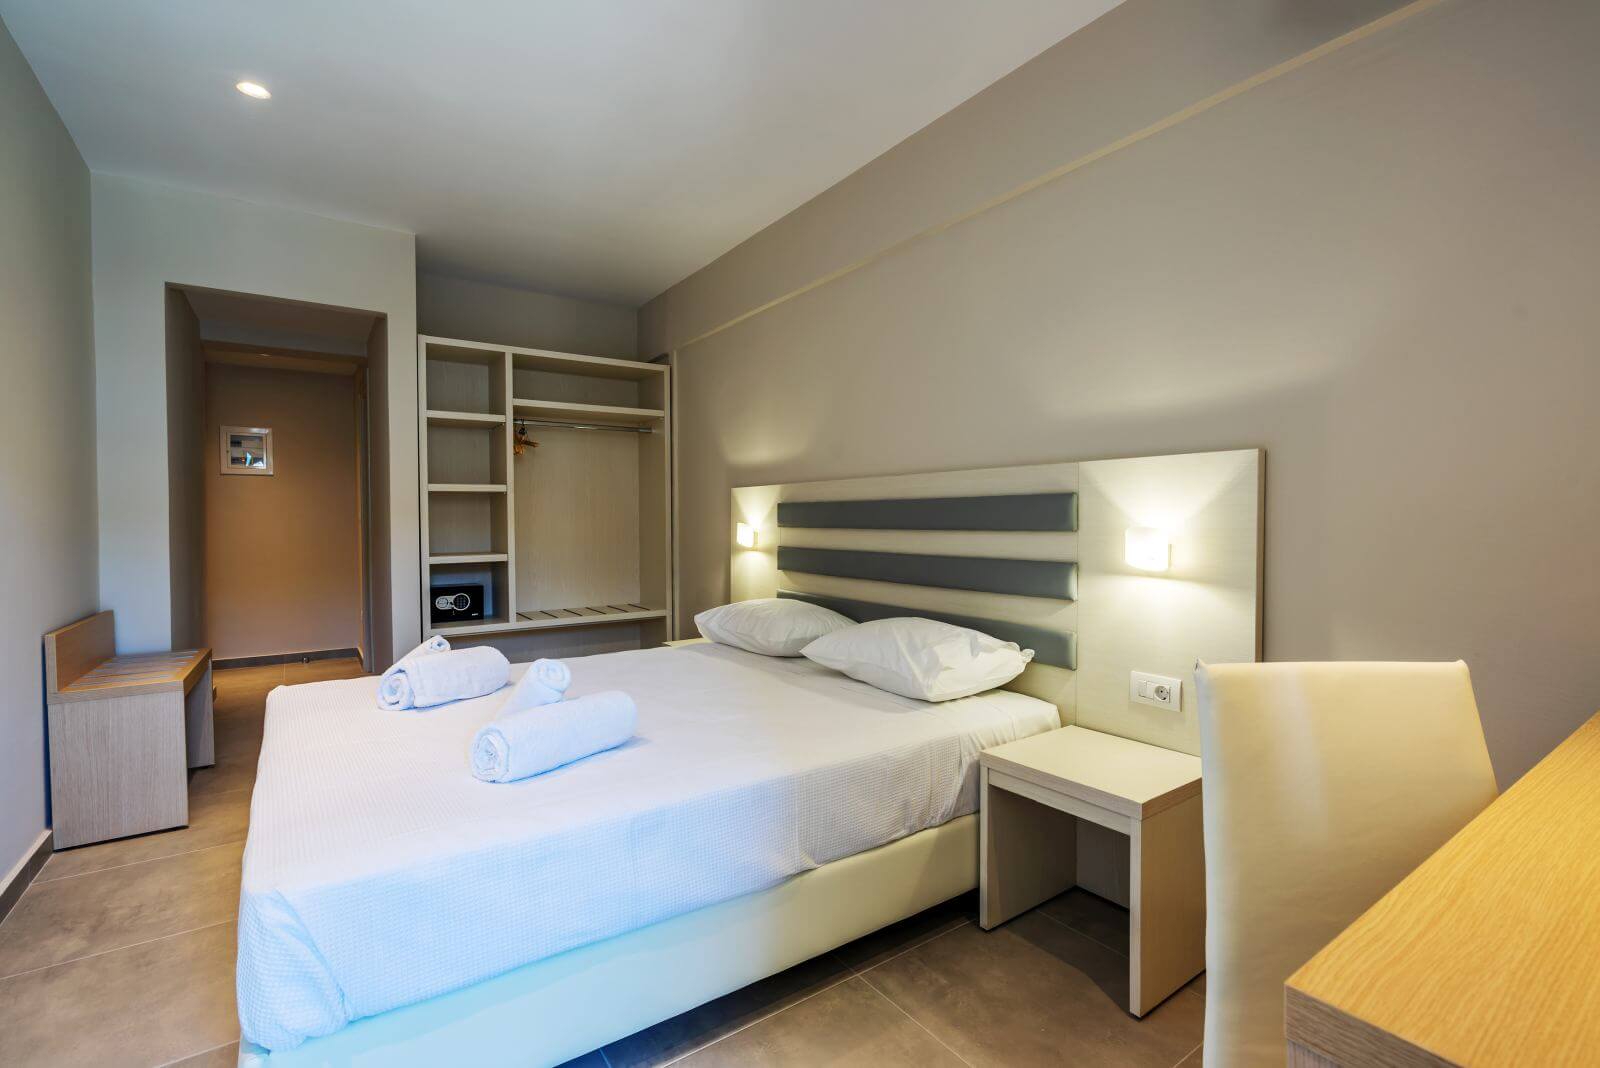 Luxury modern hotel room